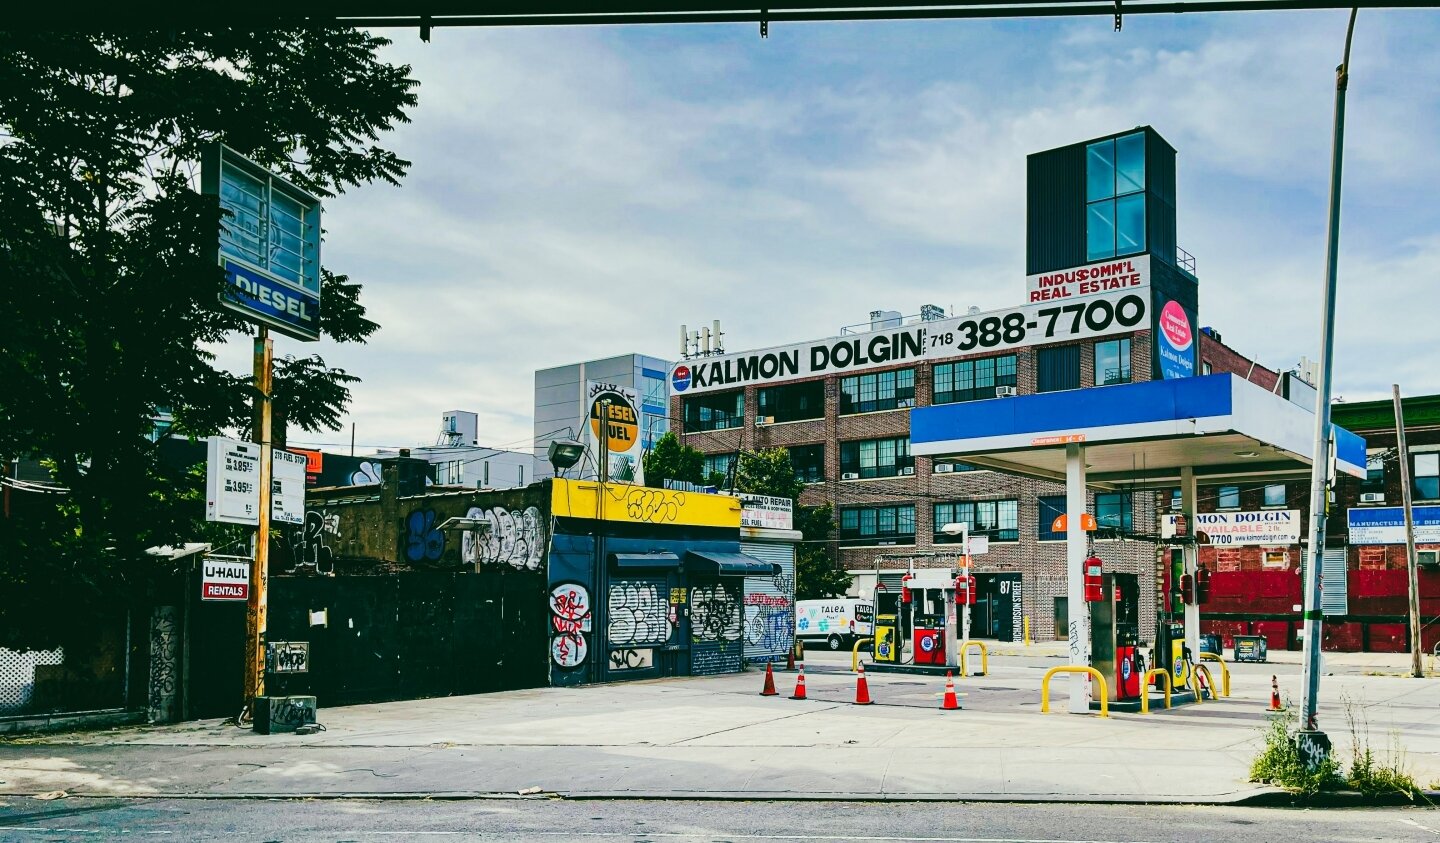 From my &quot;Brooklyn&quot; Series: Few spots of no-gentrification

#brooklyn #newyork #gentrification #gasstation #bqe #graffiti #industrial #warehouses